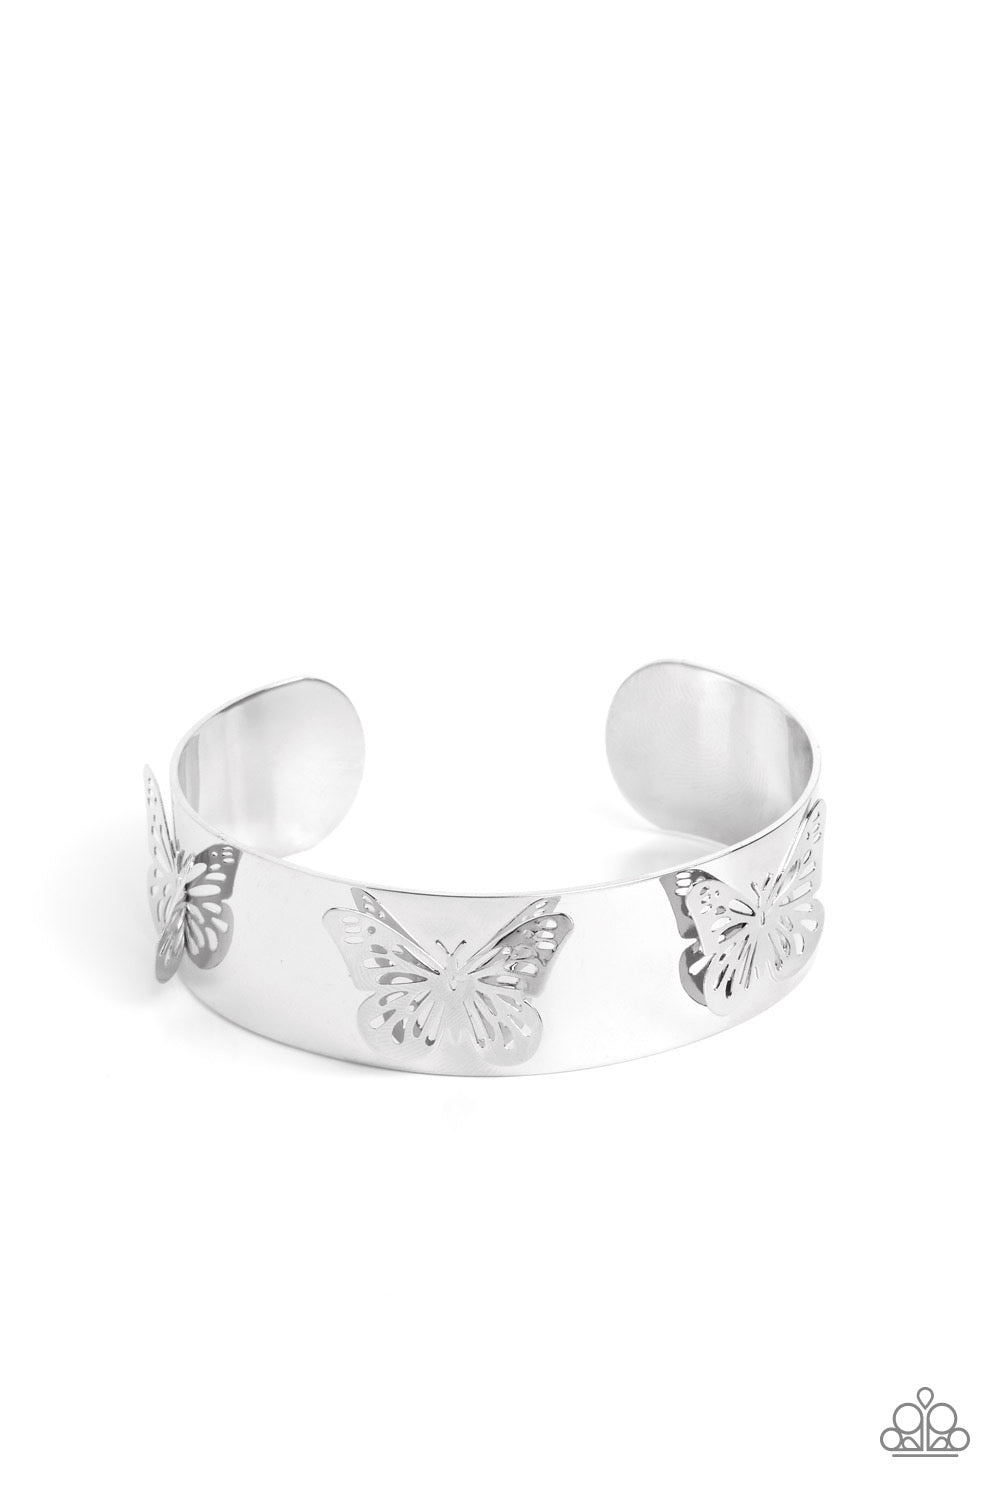 Butterfly Jewelry - Paparazzi Magical Mariposas - Silver Bracelet Paparazzi jewelry image